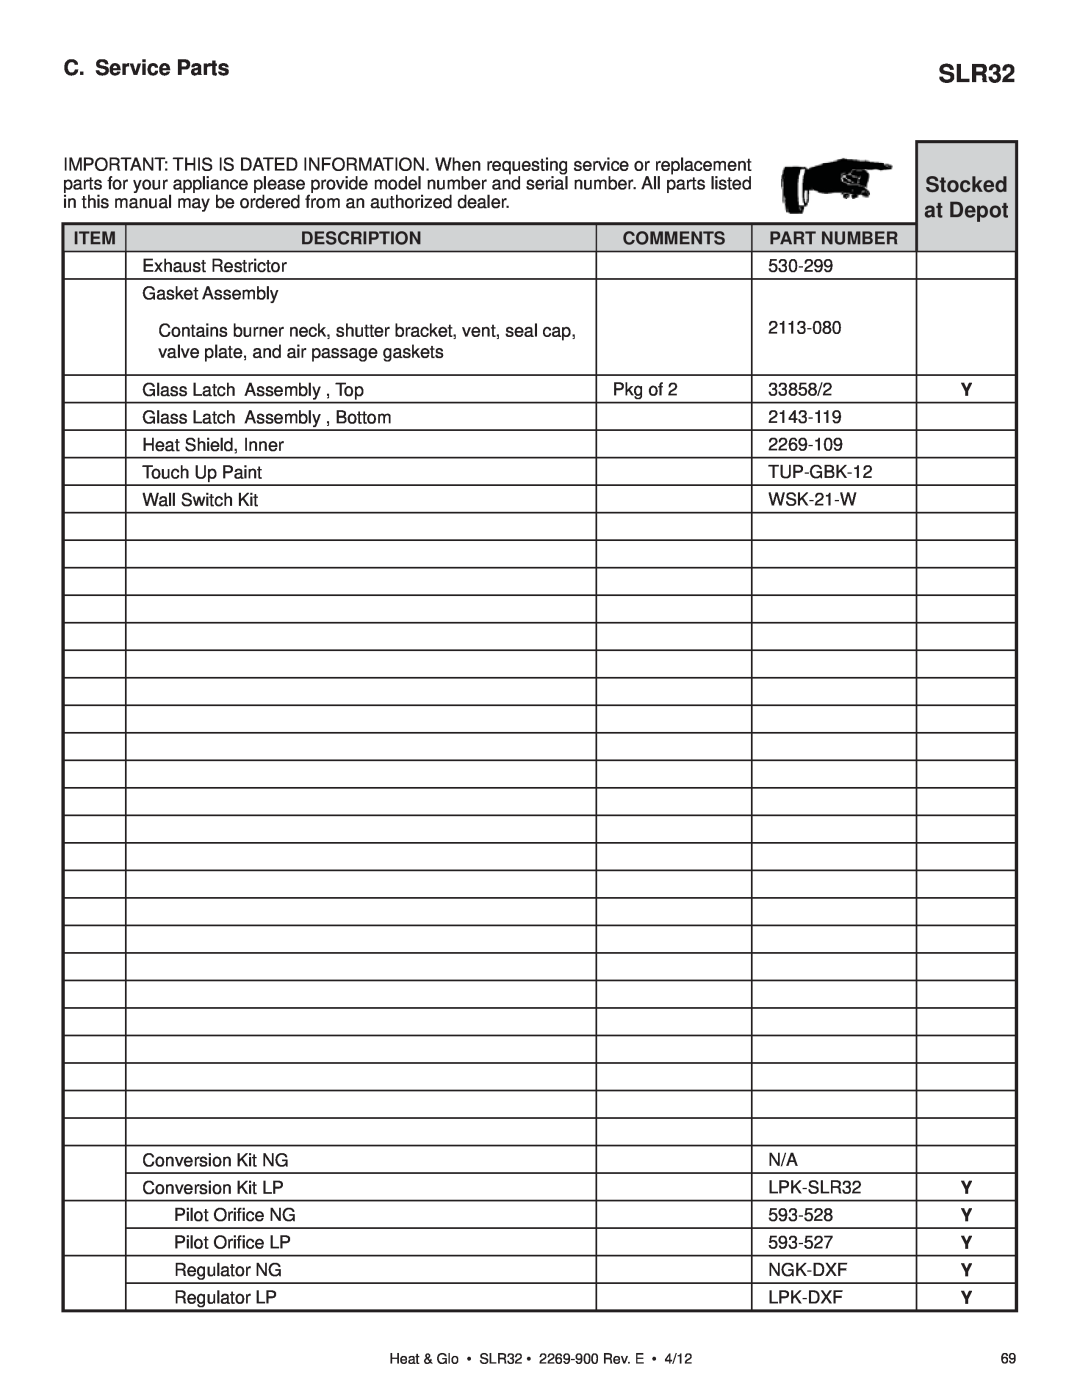 Heat & Glo LifeStyle SLR32 owner manual Stocked, C. Service Parts, at Depot, Item, Description, Comments, Part Number 